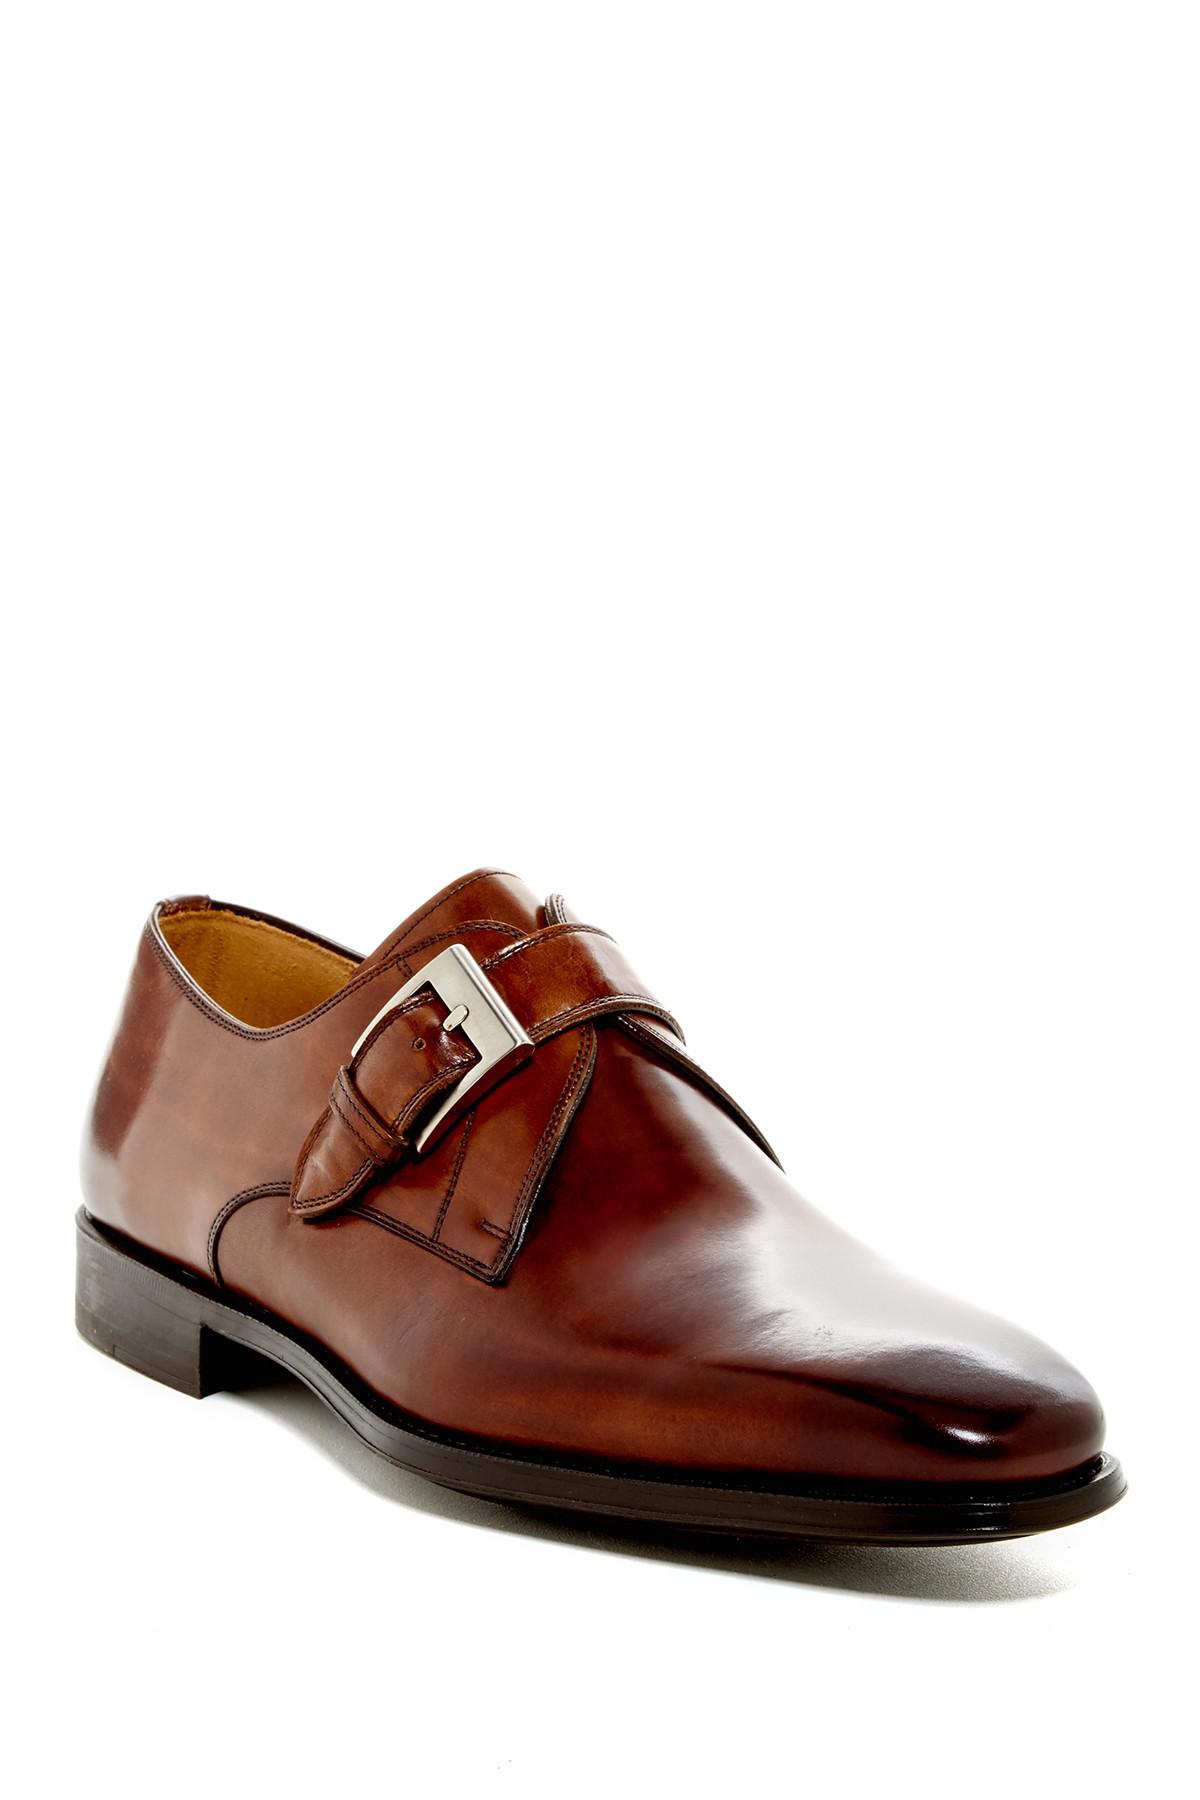 Lyst - Magnanni Shoes Tudanca Buckle Dress Shoe in Brown for Men